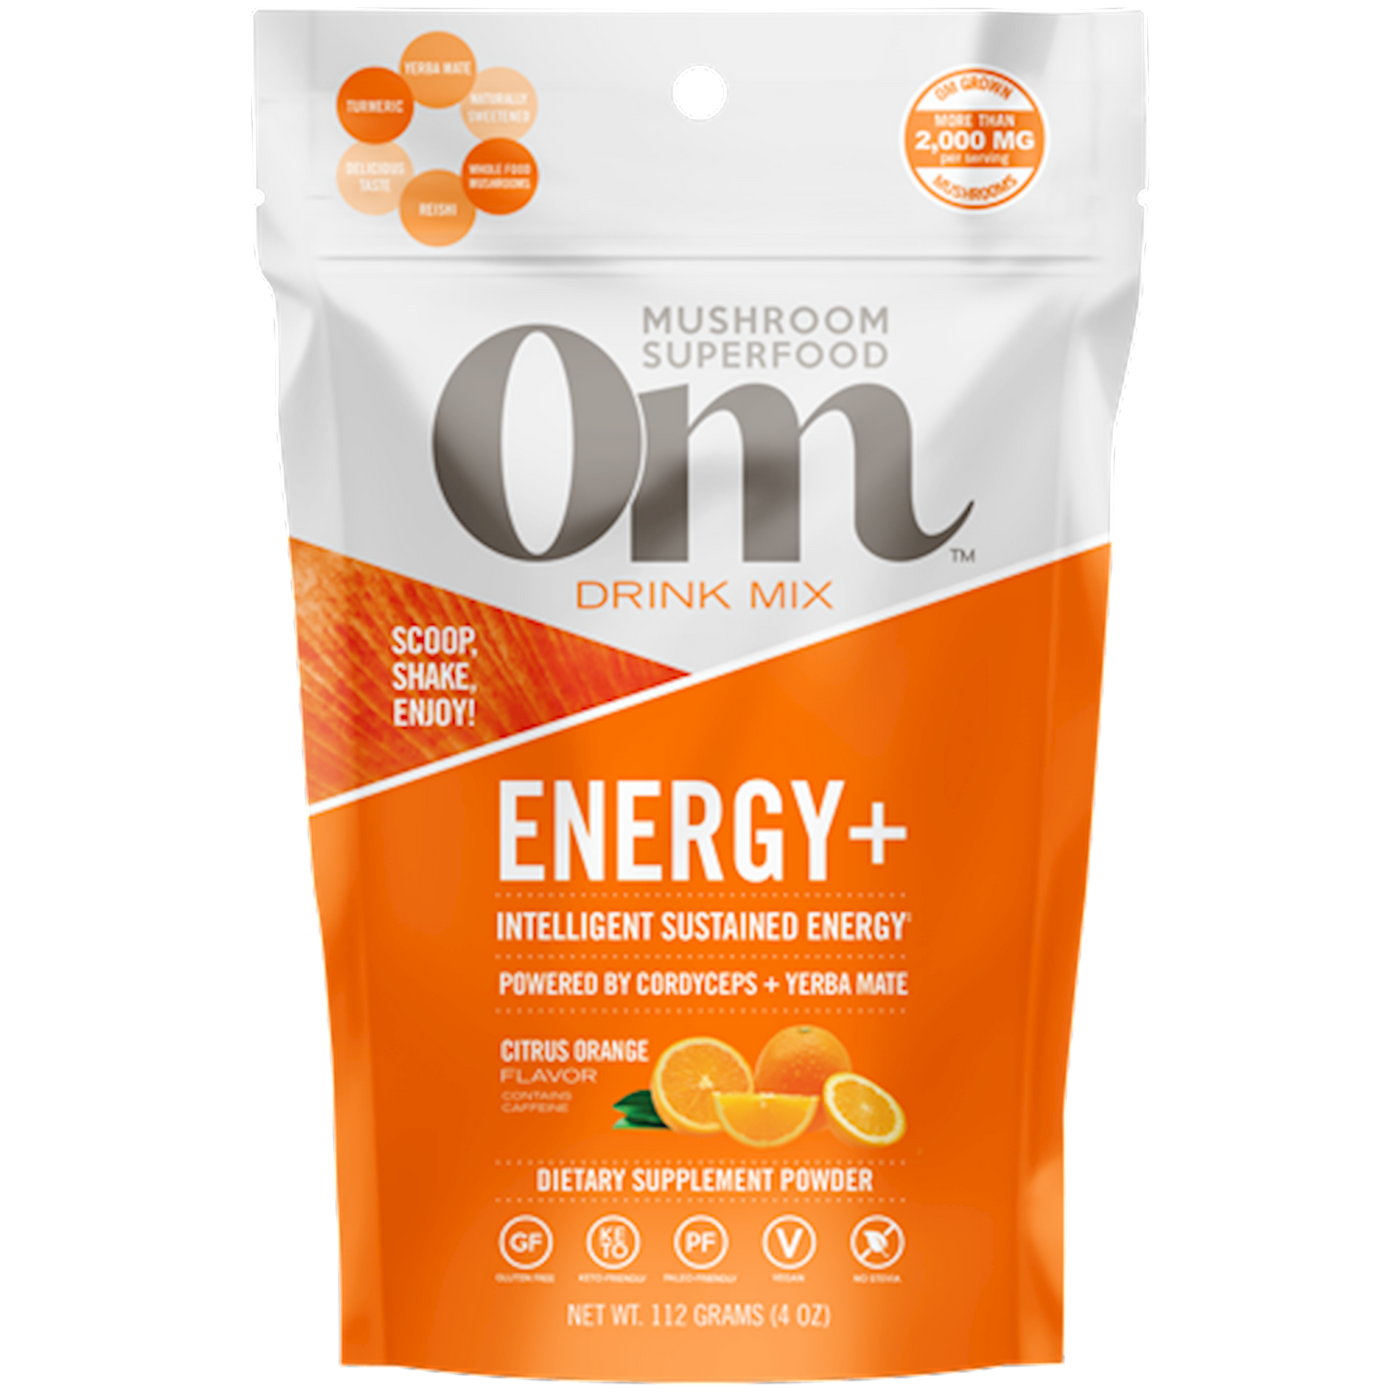 Energy+ Orange Mush Drink Mix  Curated Wellness